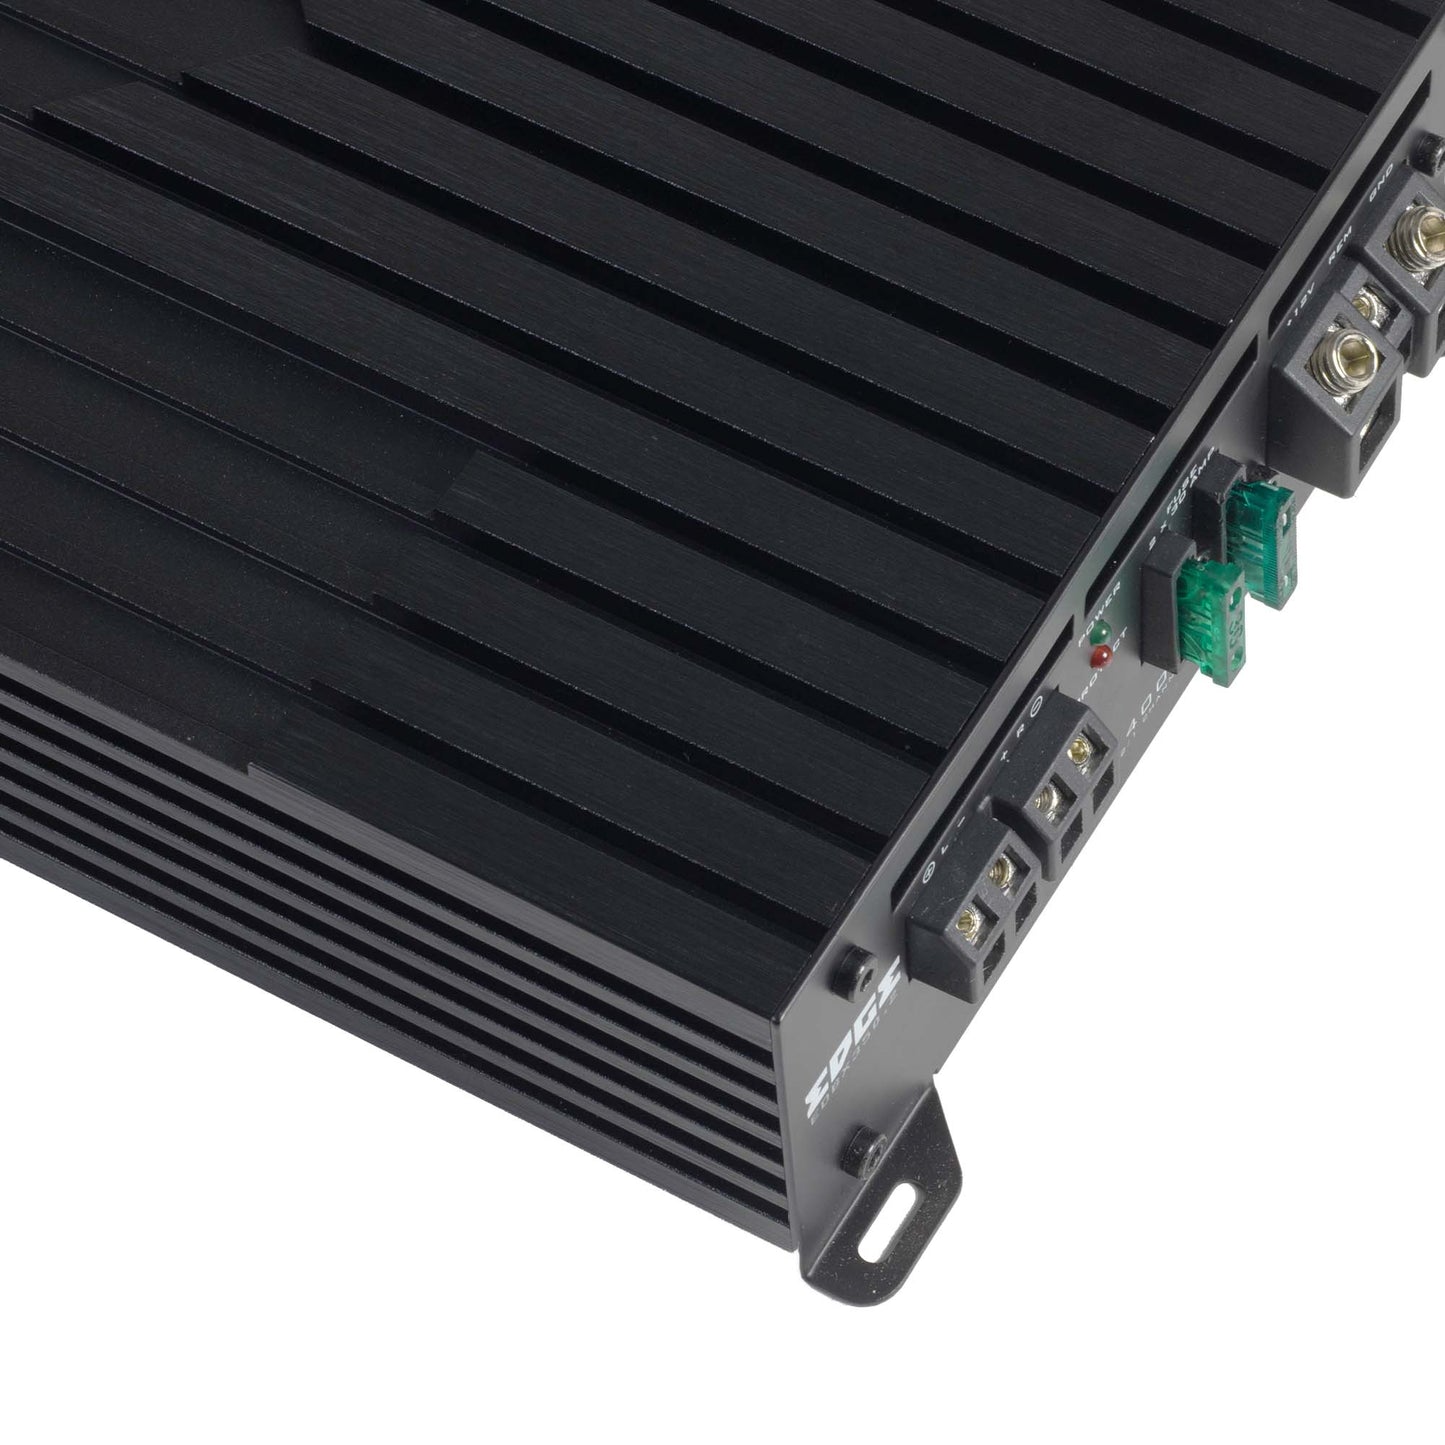 EDBX350.2-E1 | EDGE DBX Series 2 Channel 1400 watts Amplifier